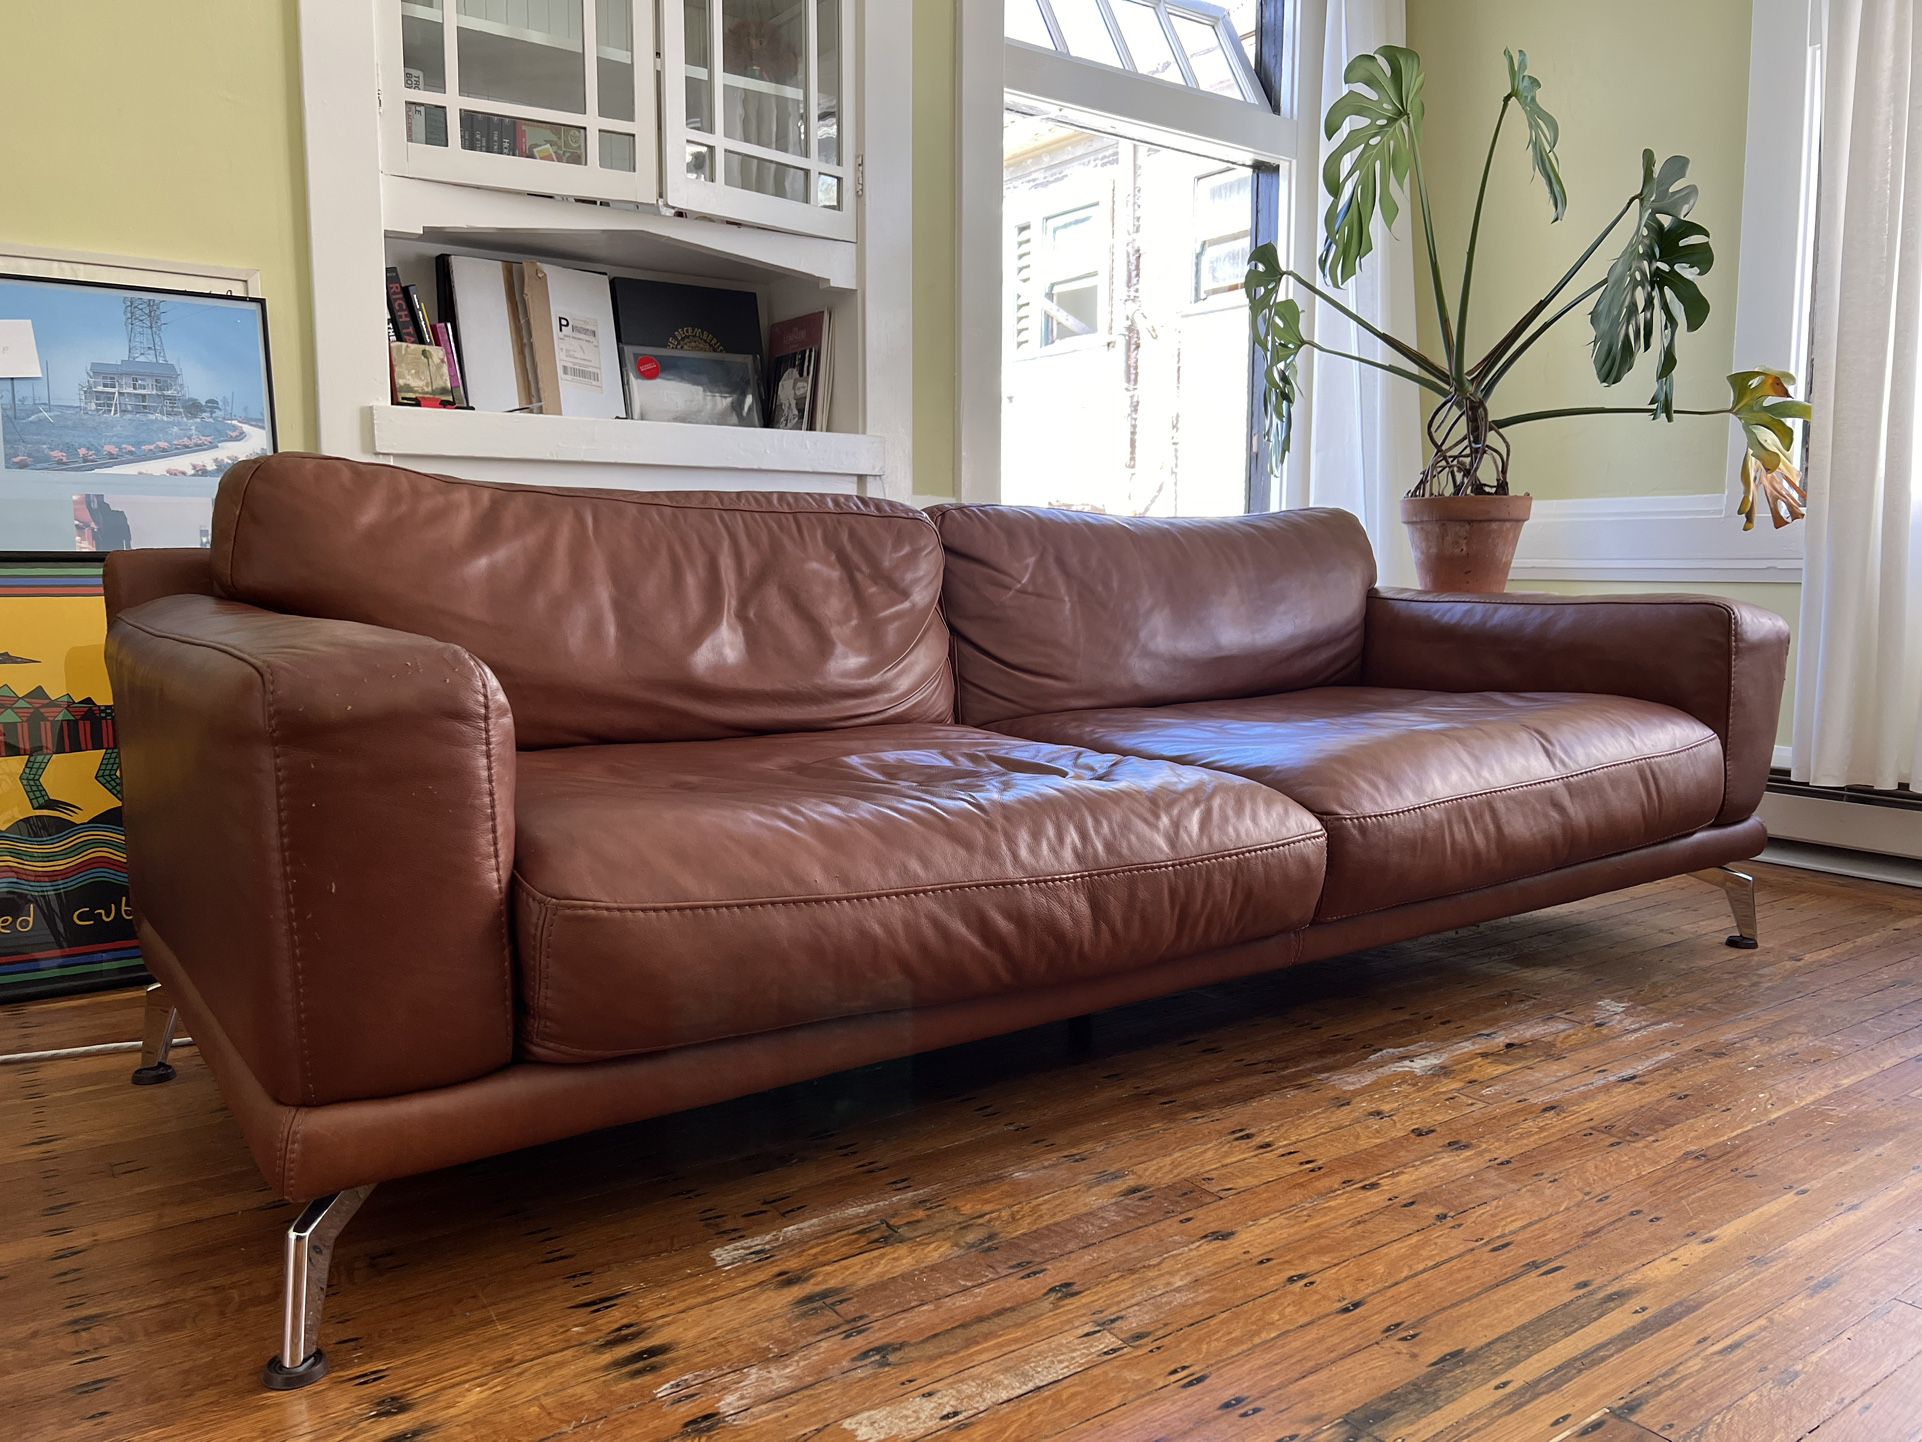 Scandinavian Design Peruna Cognac Leather Couch